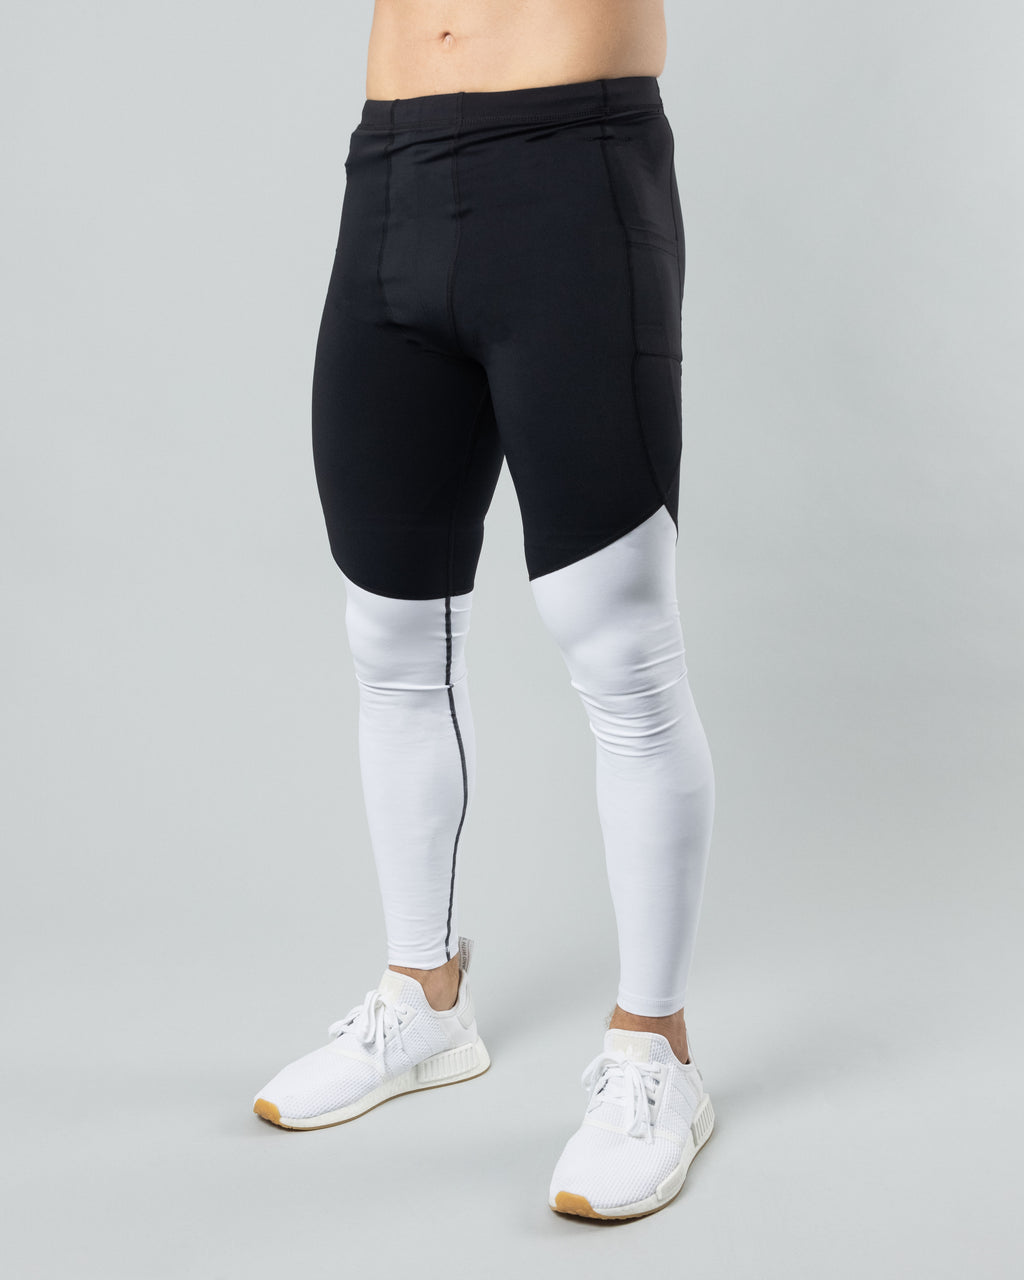 NEW Men's Nike Pro 3/4 Dri-Fit Compression Tights Pants White  BV5643-100 4XL | eBay